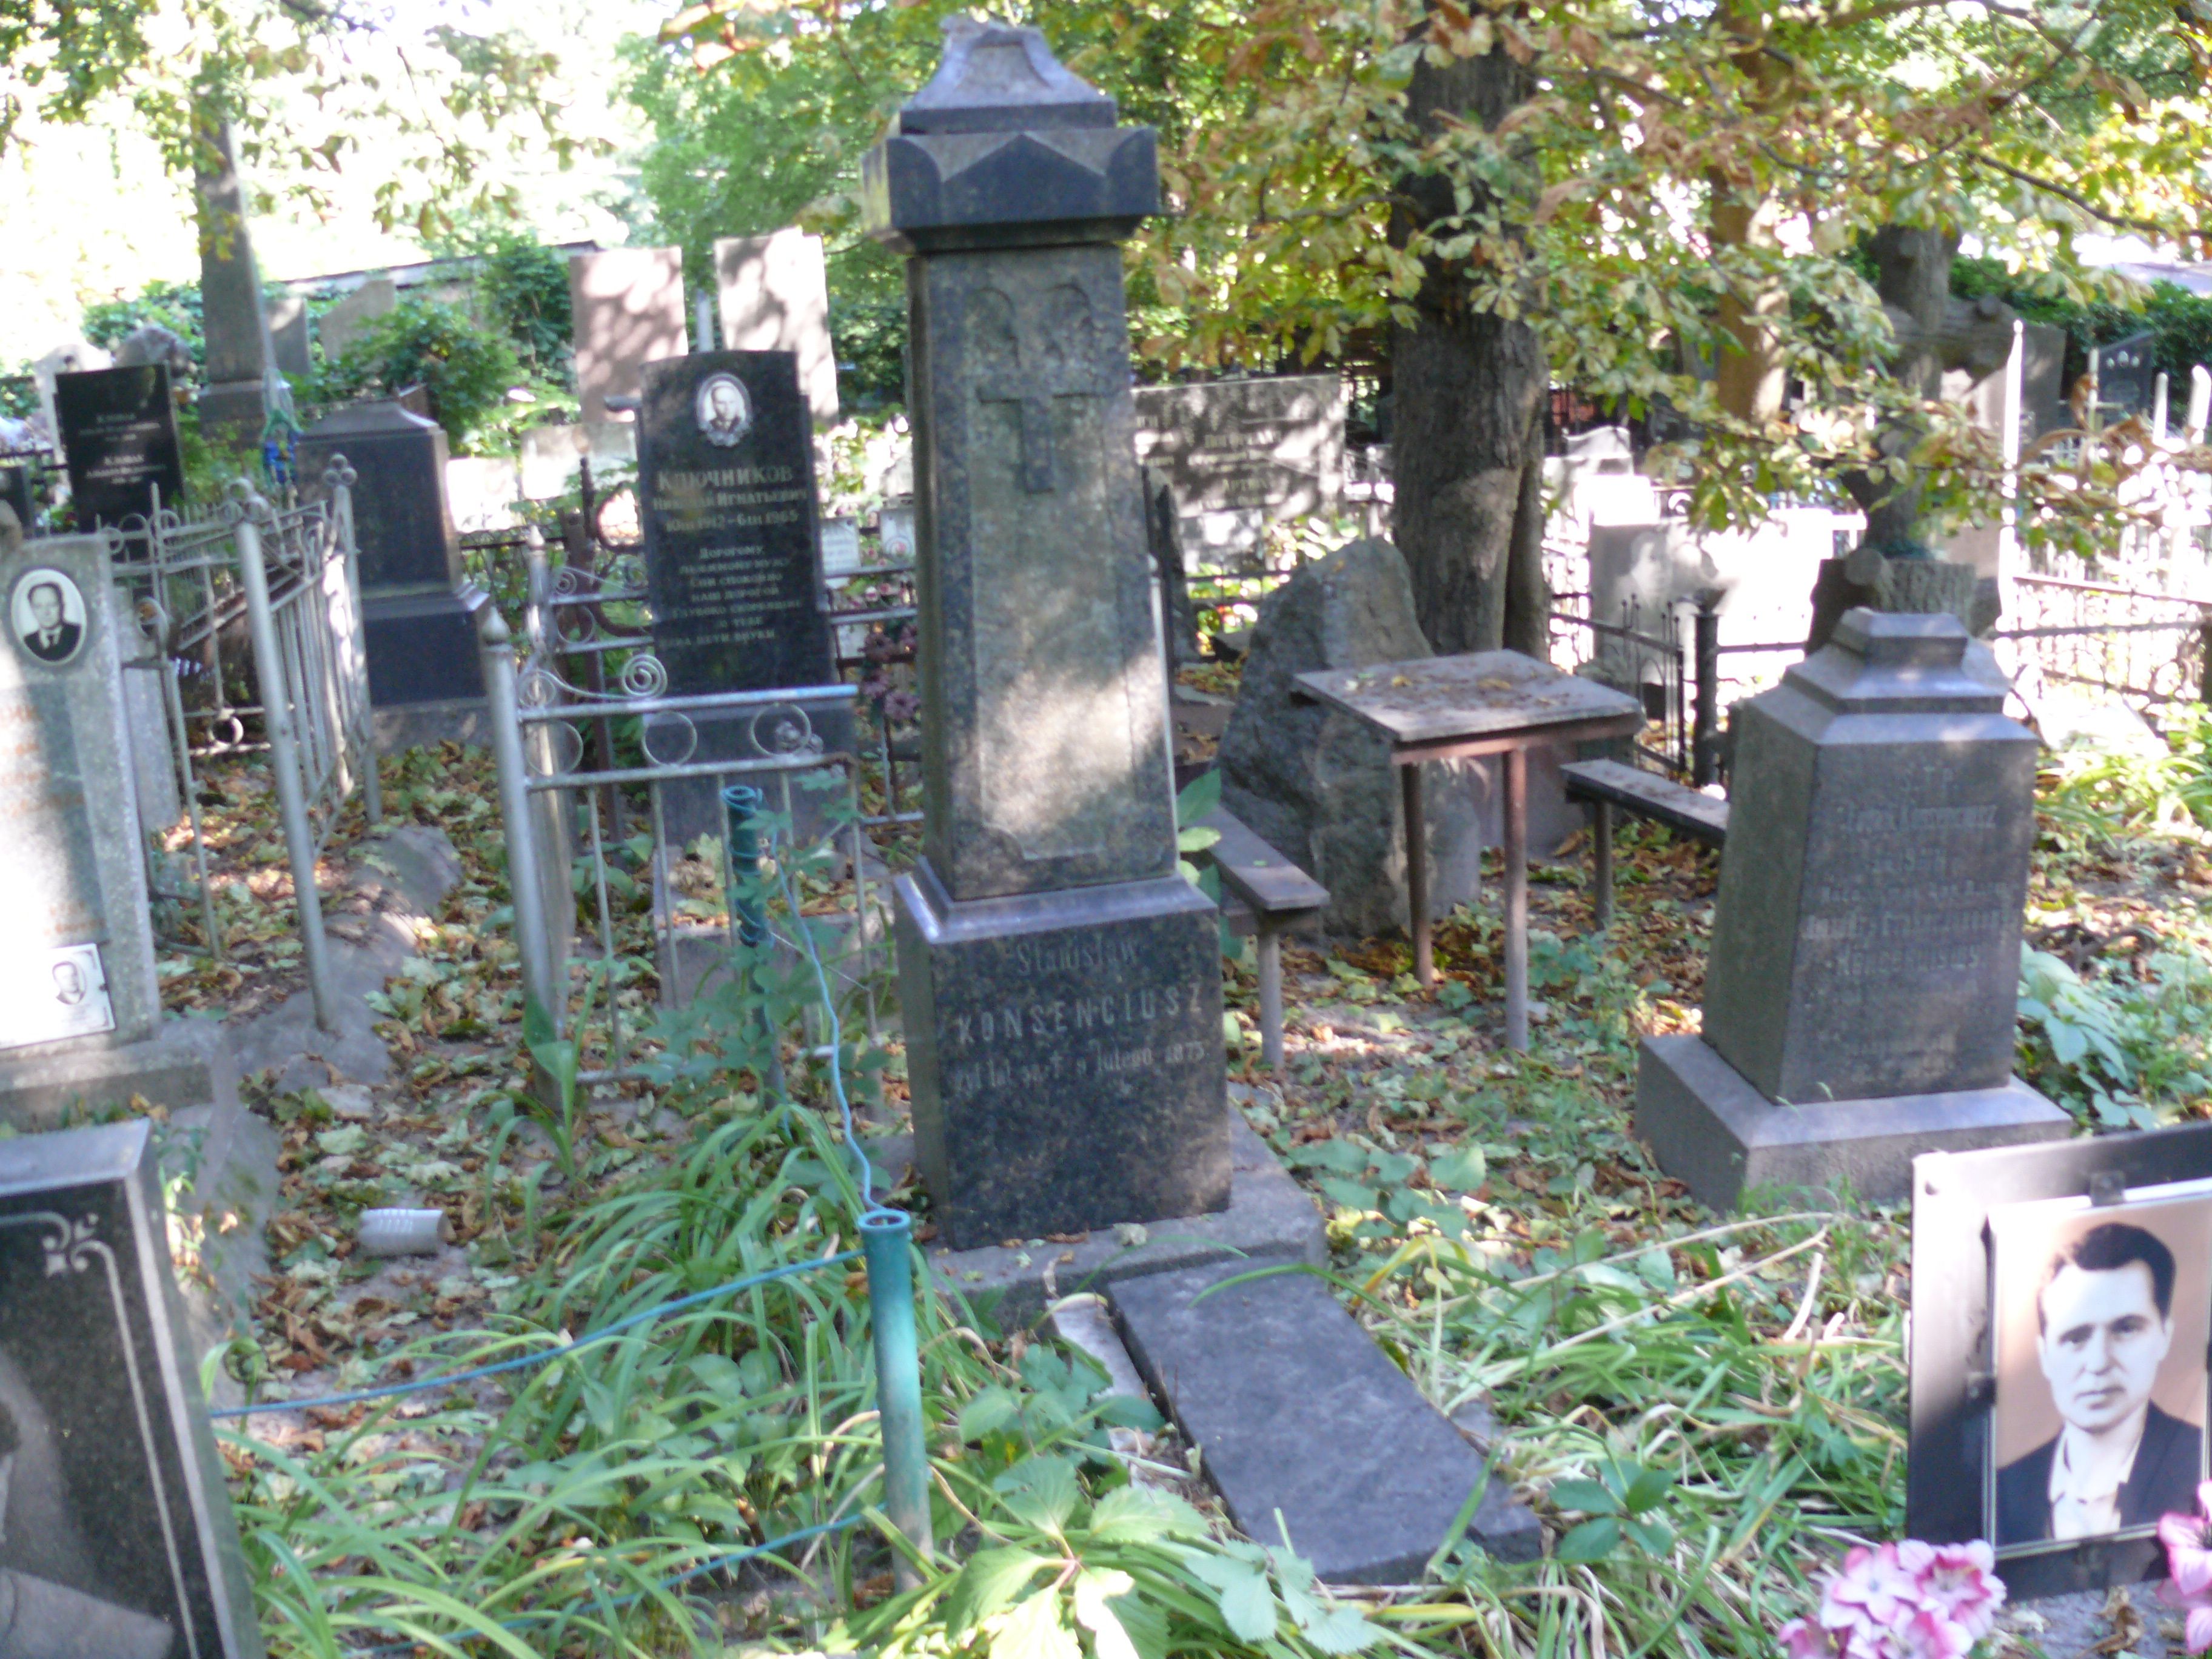 Tombstone of Stanislaw Konsencius